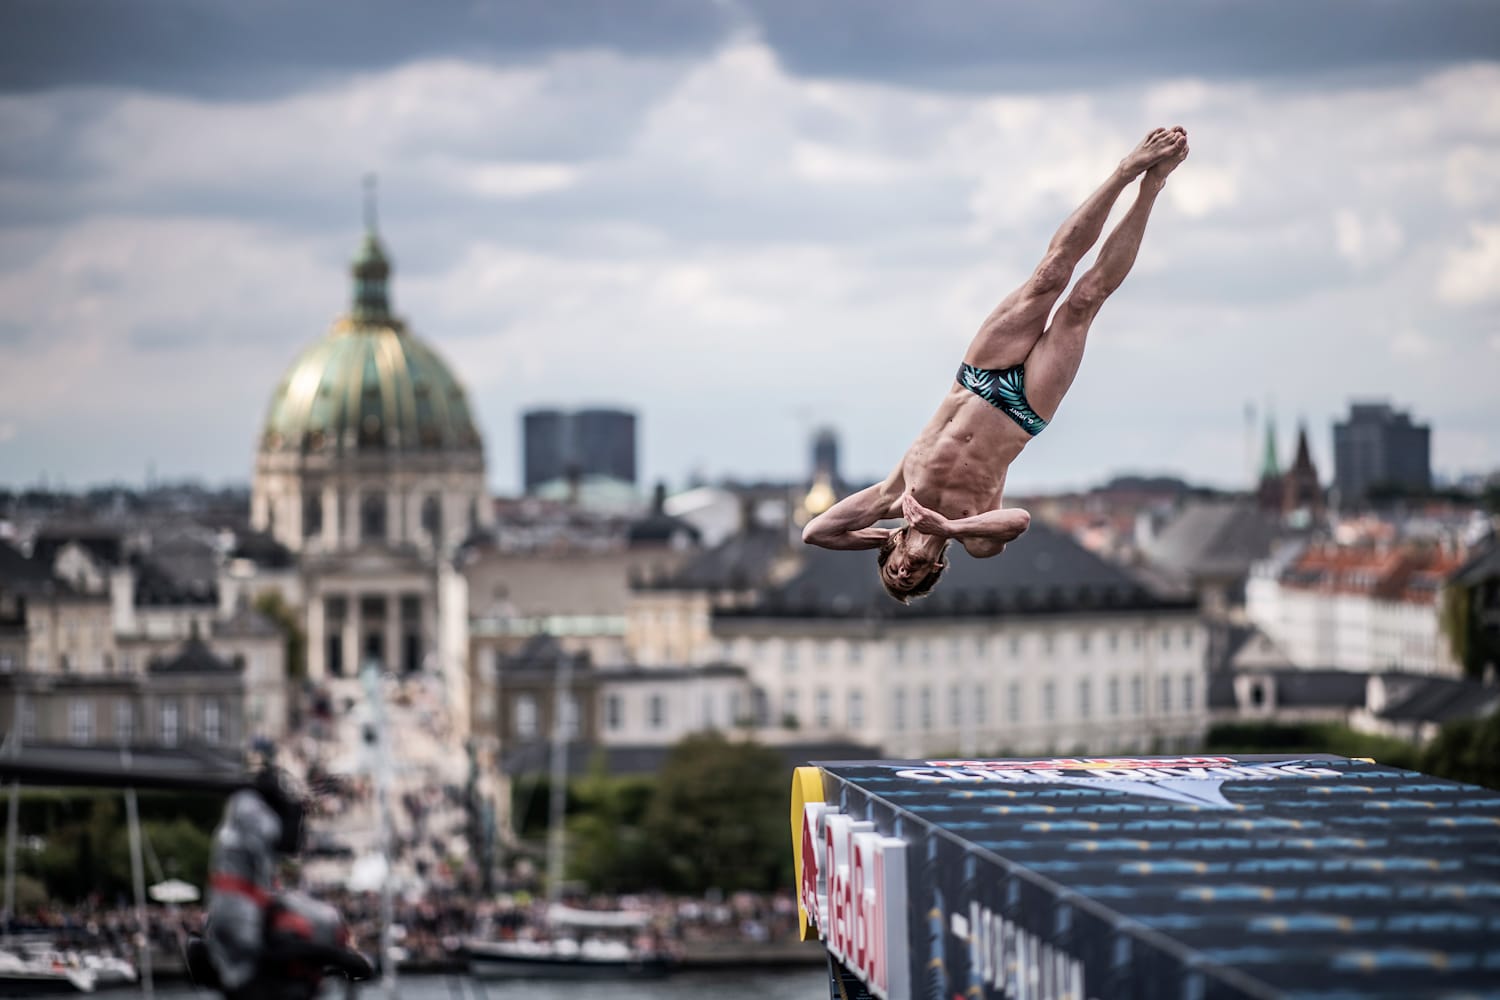 Red Bull Cliff Diving Copenhagen 2018 Event highlights